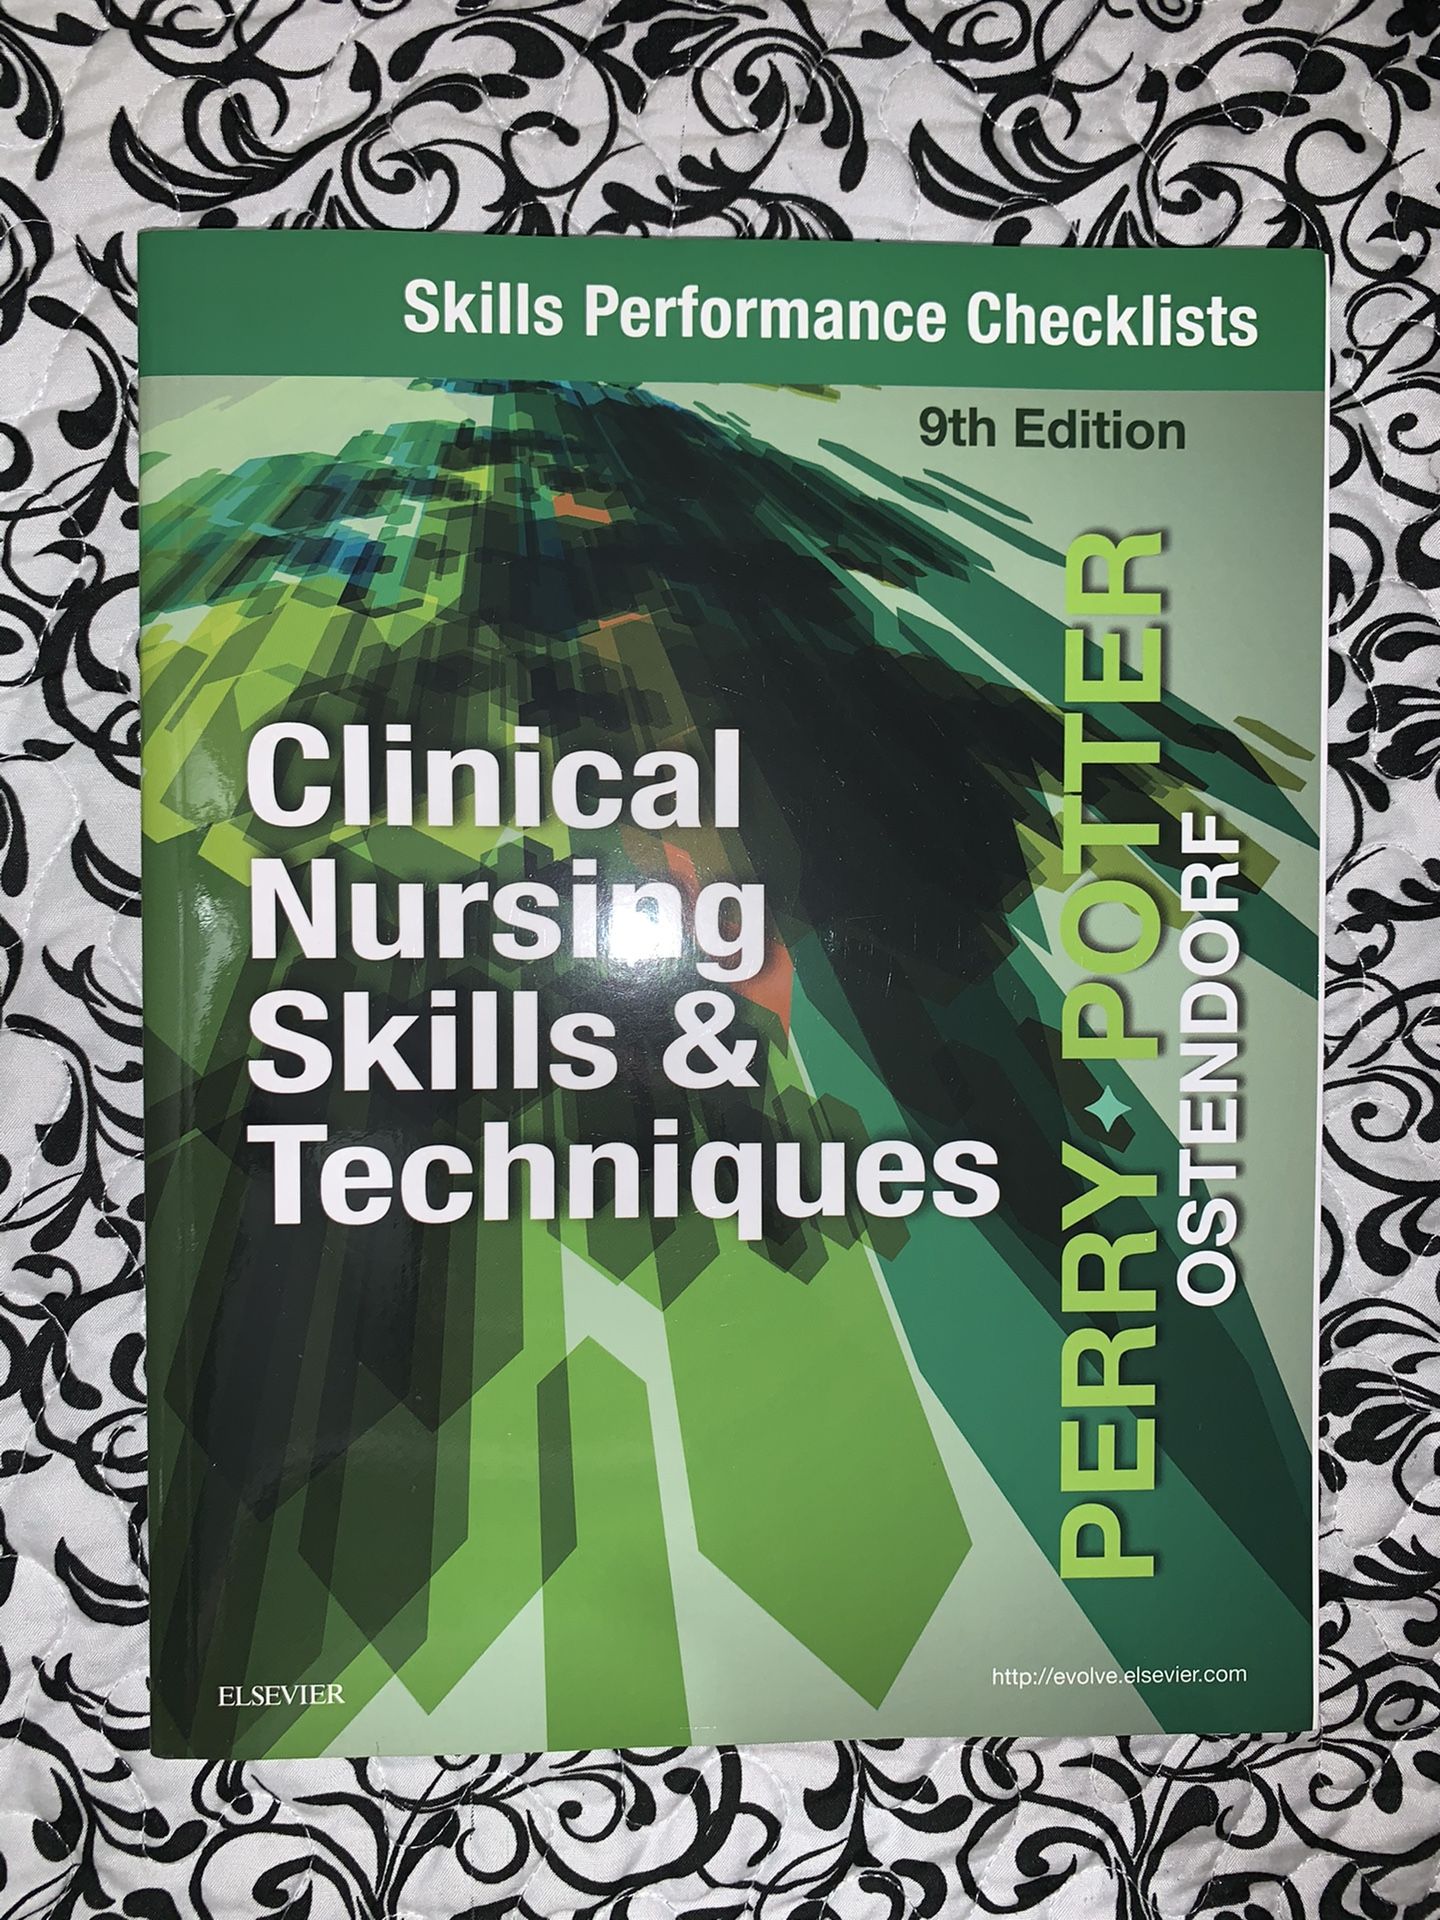 Skills Performance Checklist for Clinical Nursing Skills & Techniques